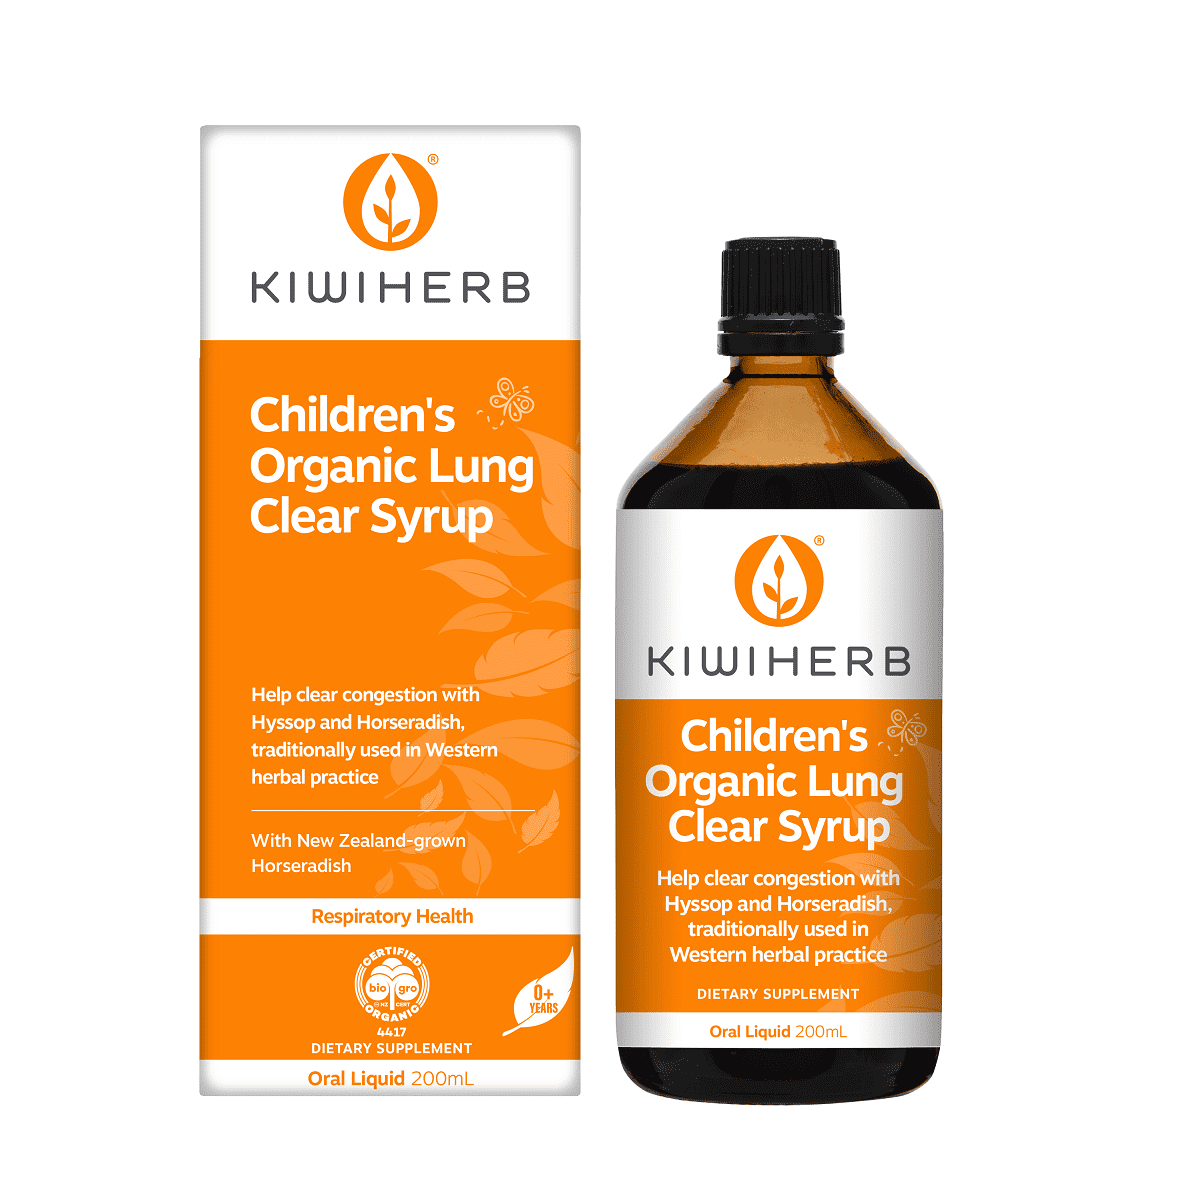 Kiwiherb Children's Organic Lung Clear Syrup.